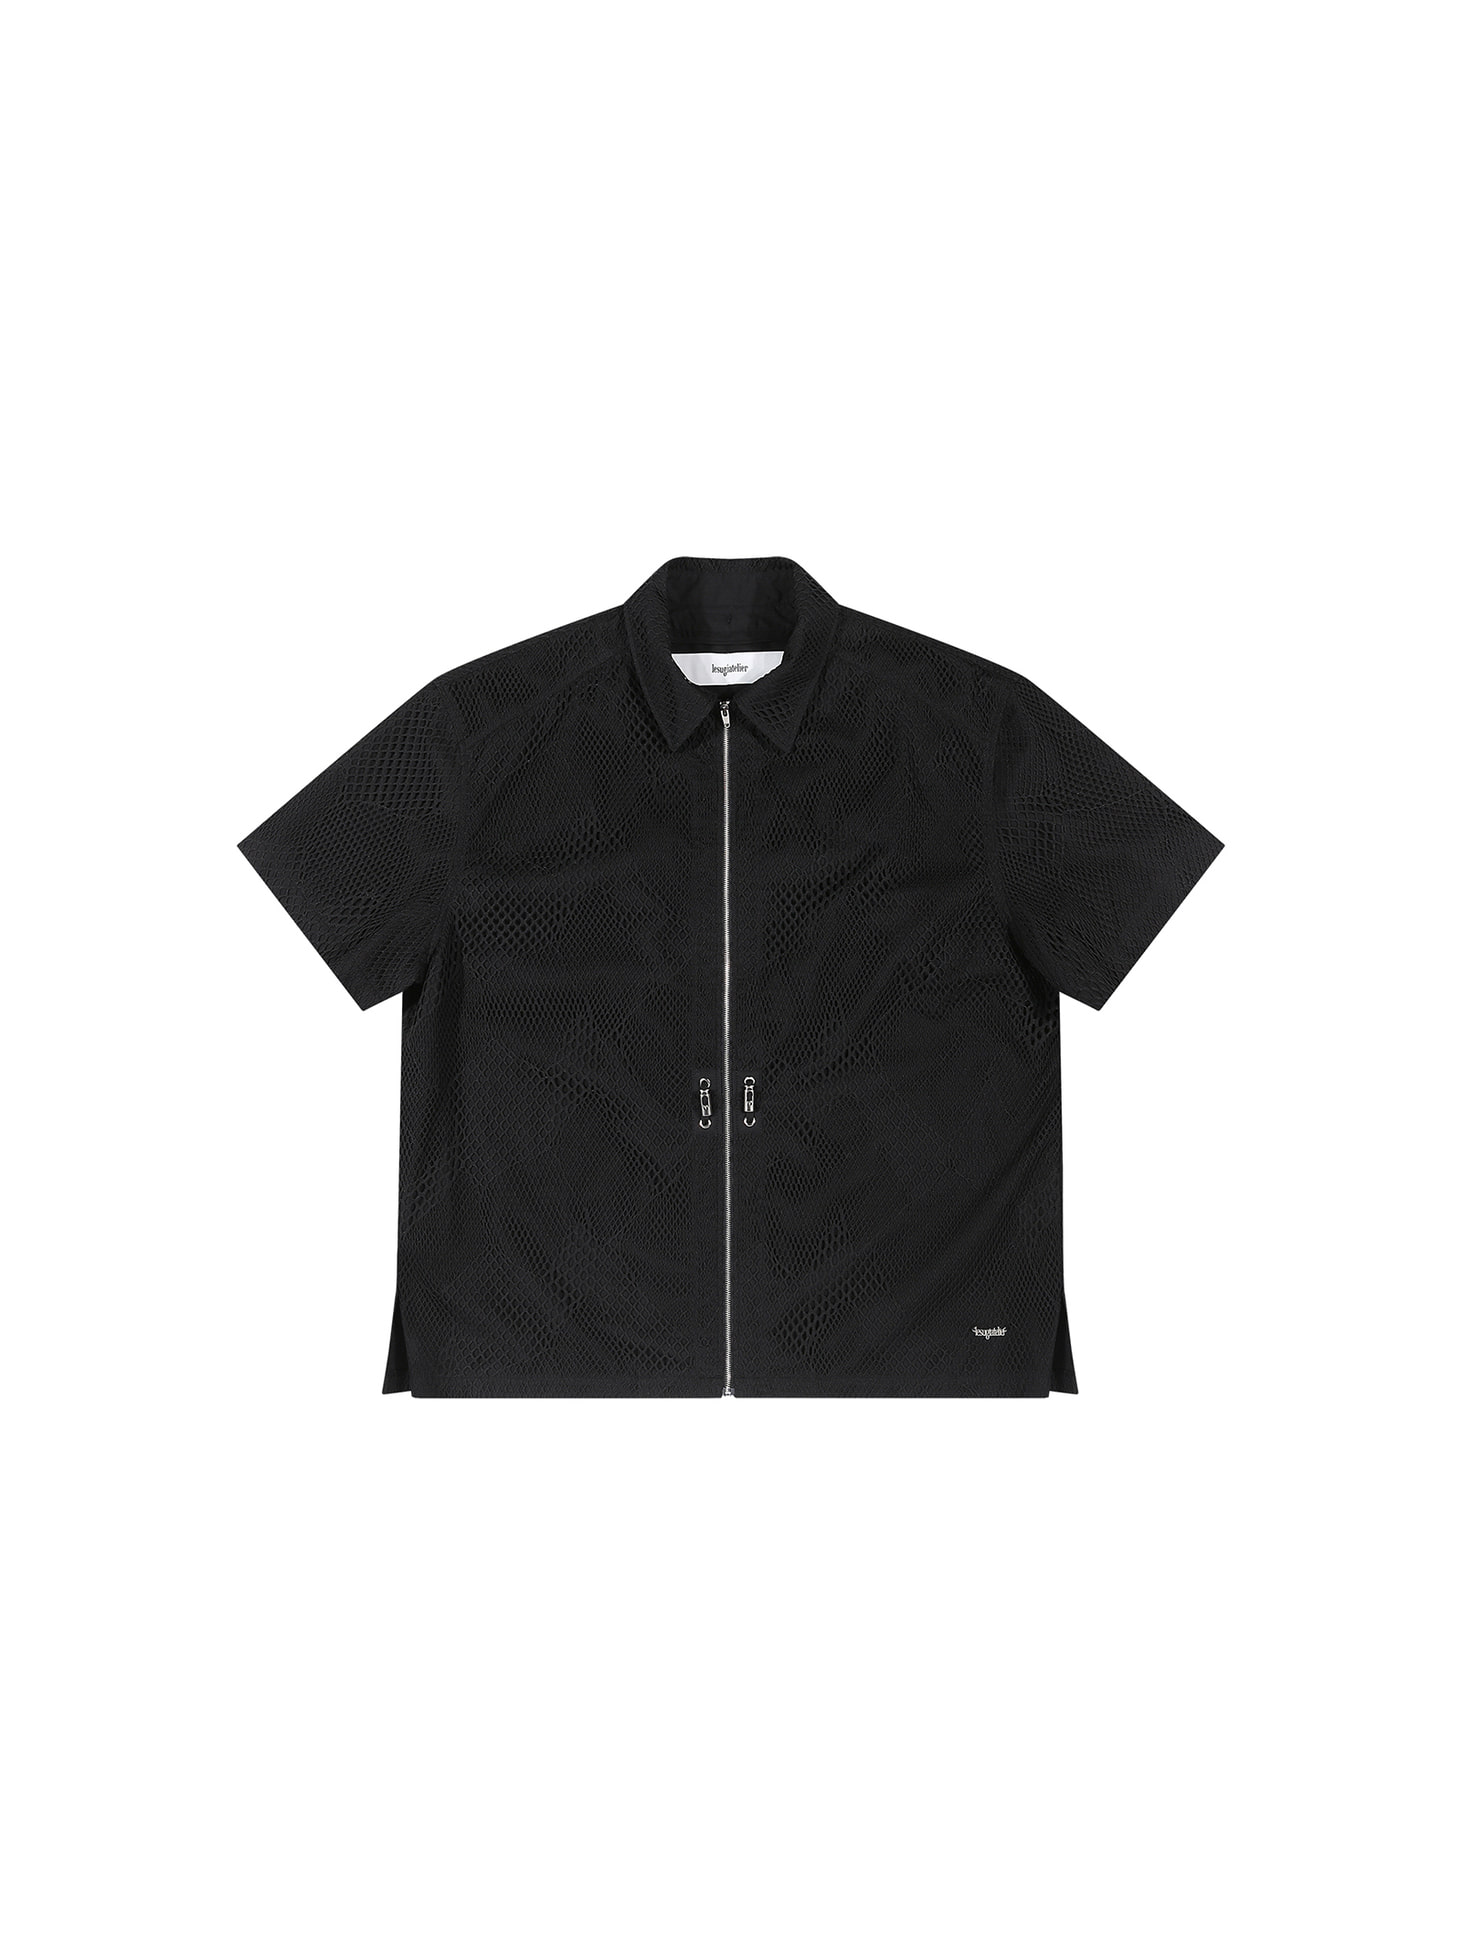 Mesh overlay drawstring shirt / Black